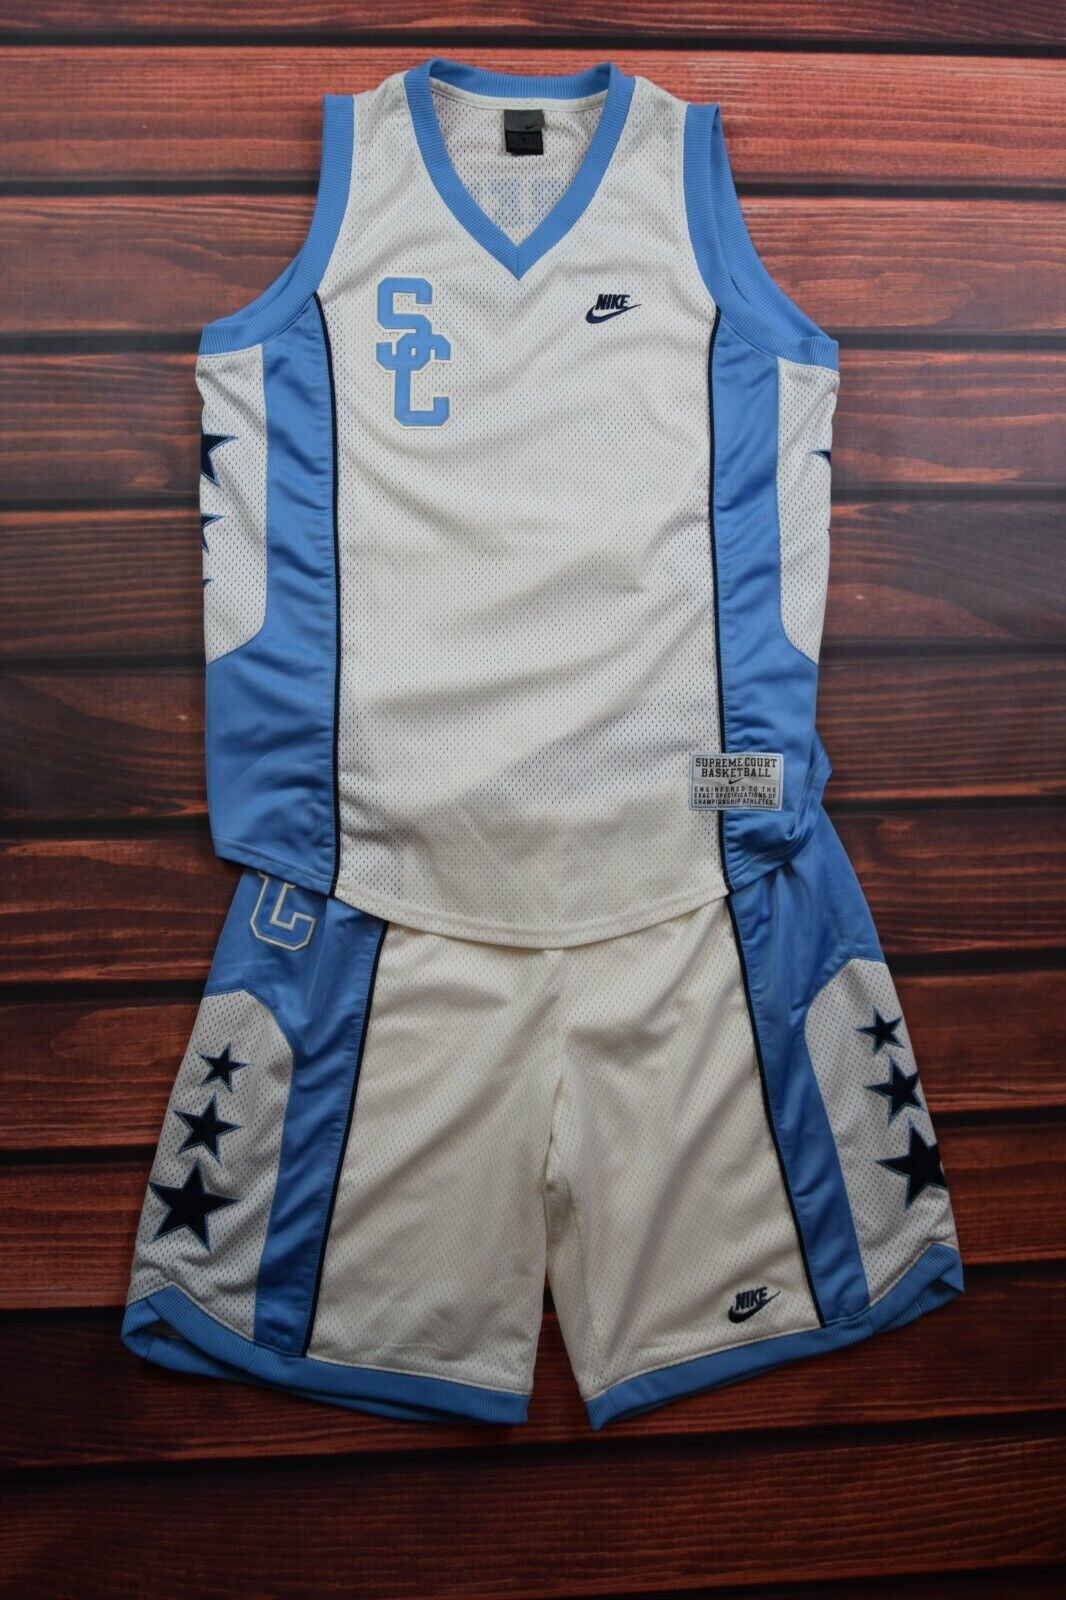 nike supreme court set shirt/jersey + shorts blue white M medium 